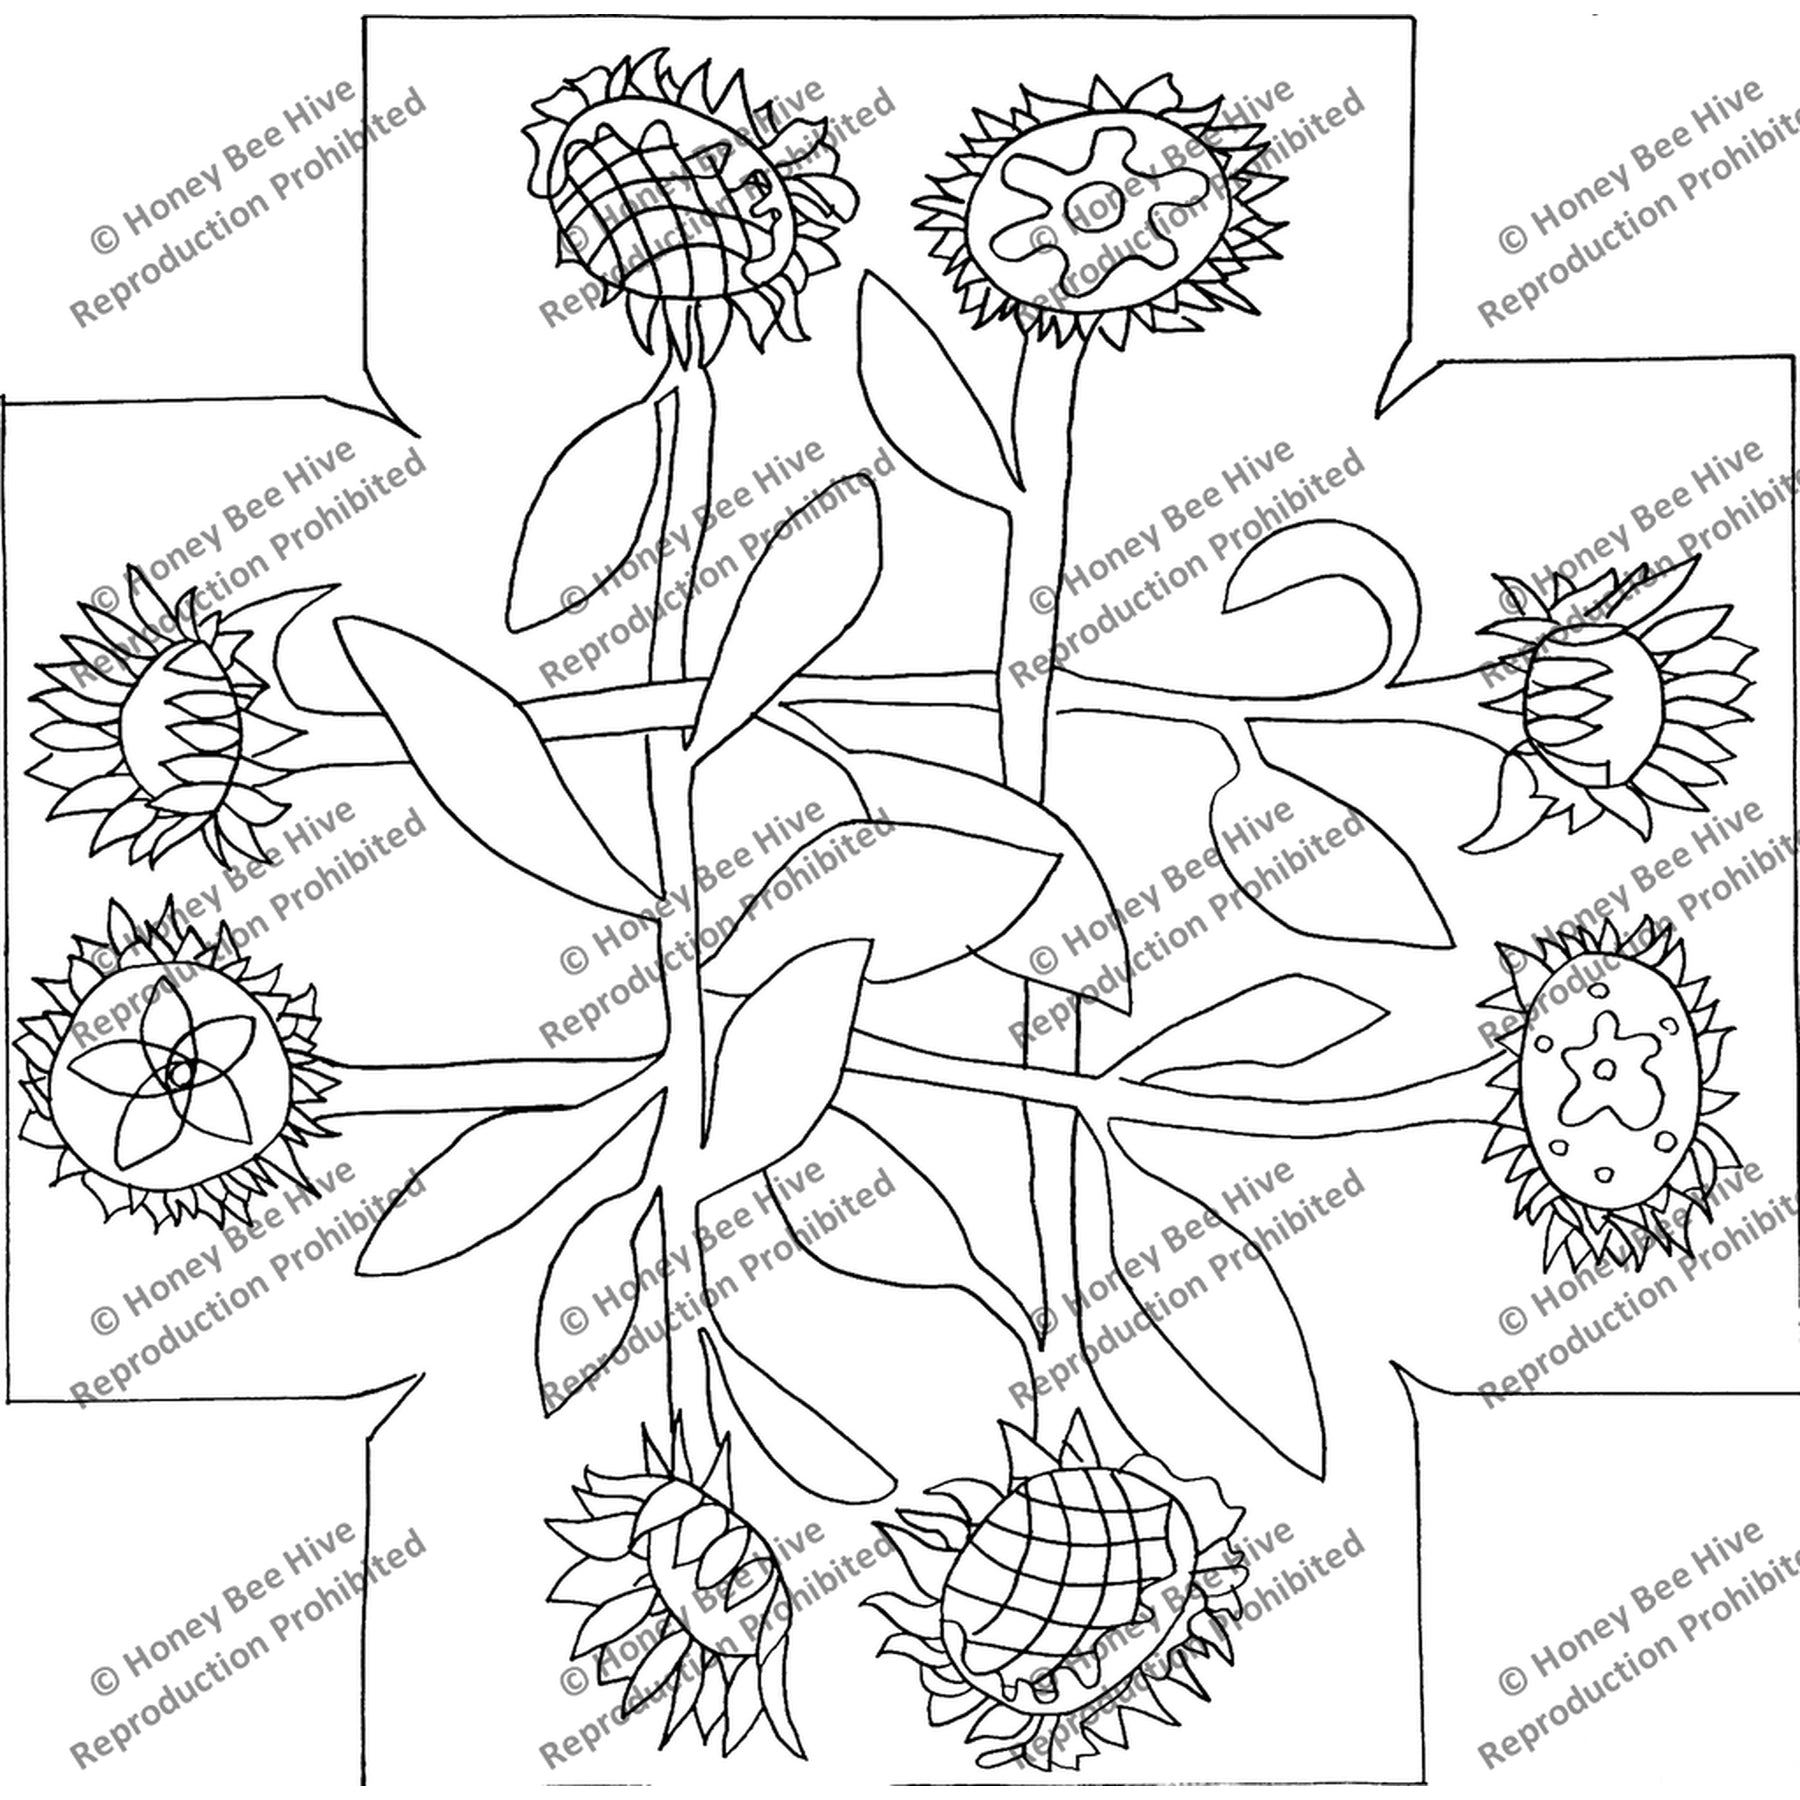 Sunflower - Square Footstool Pattern – 26”, rug hooking pattern